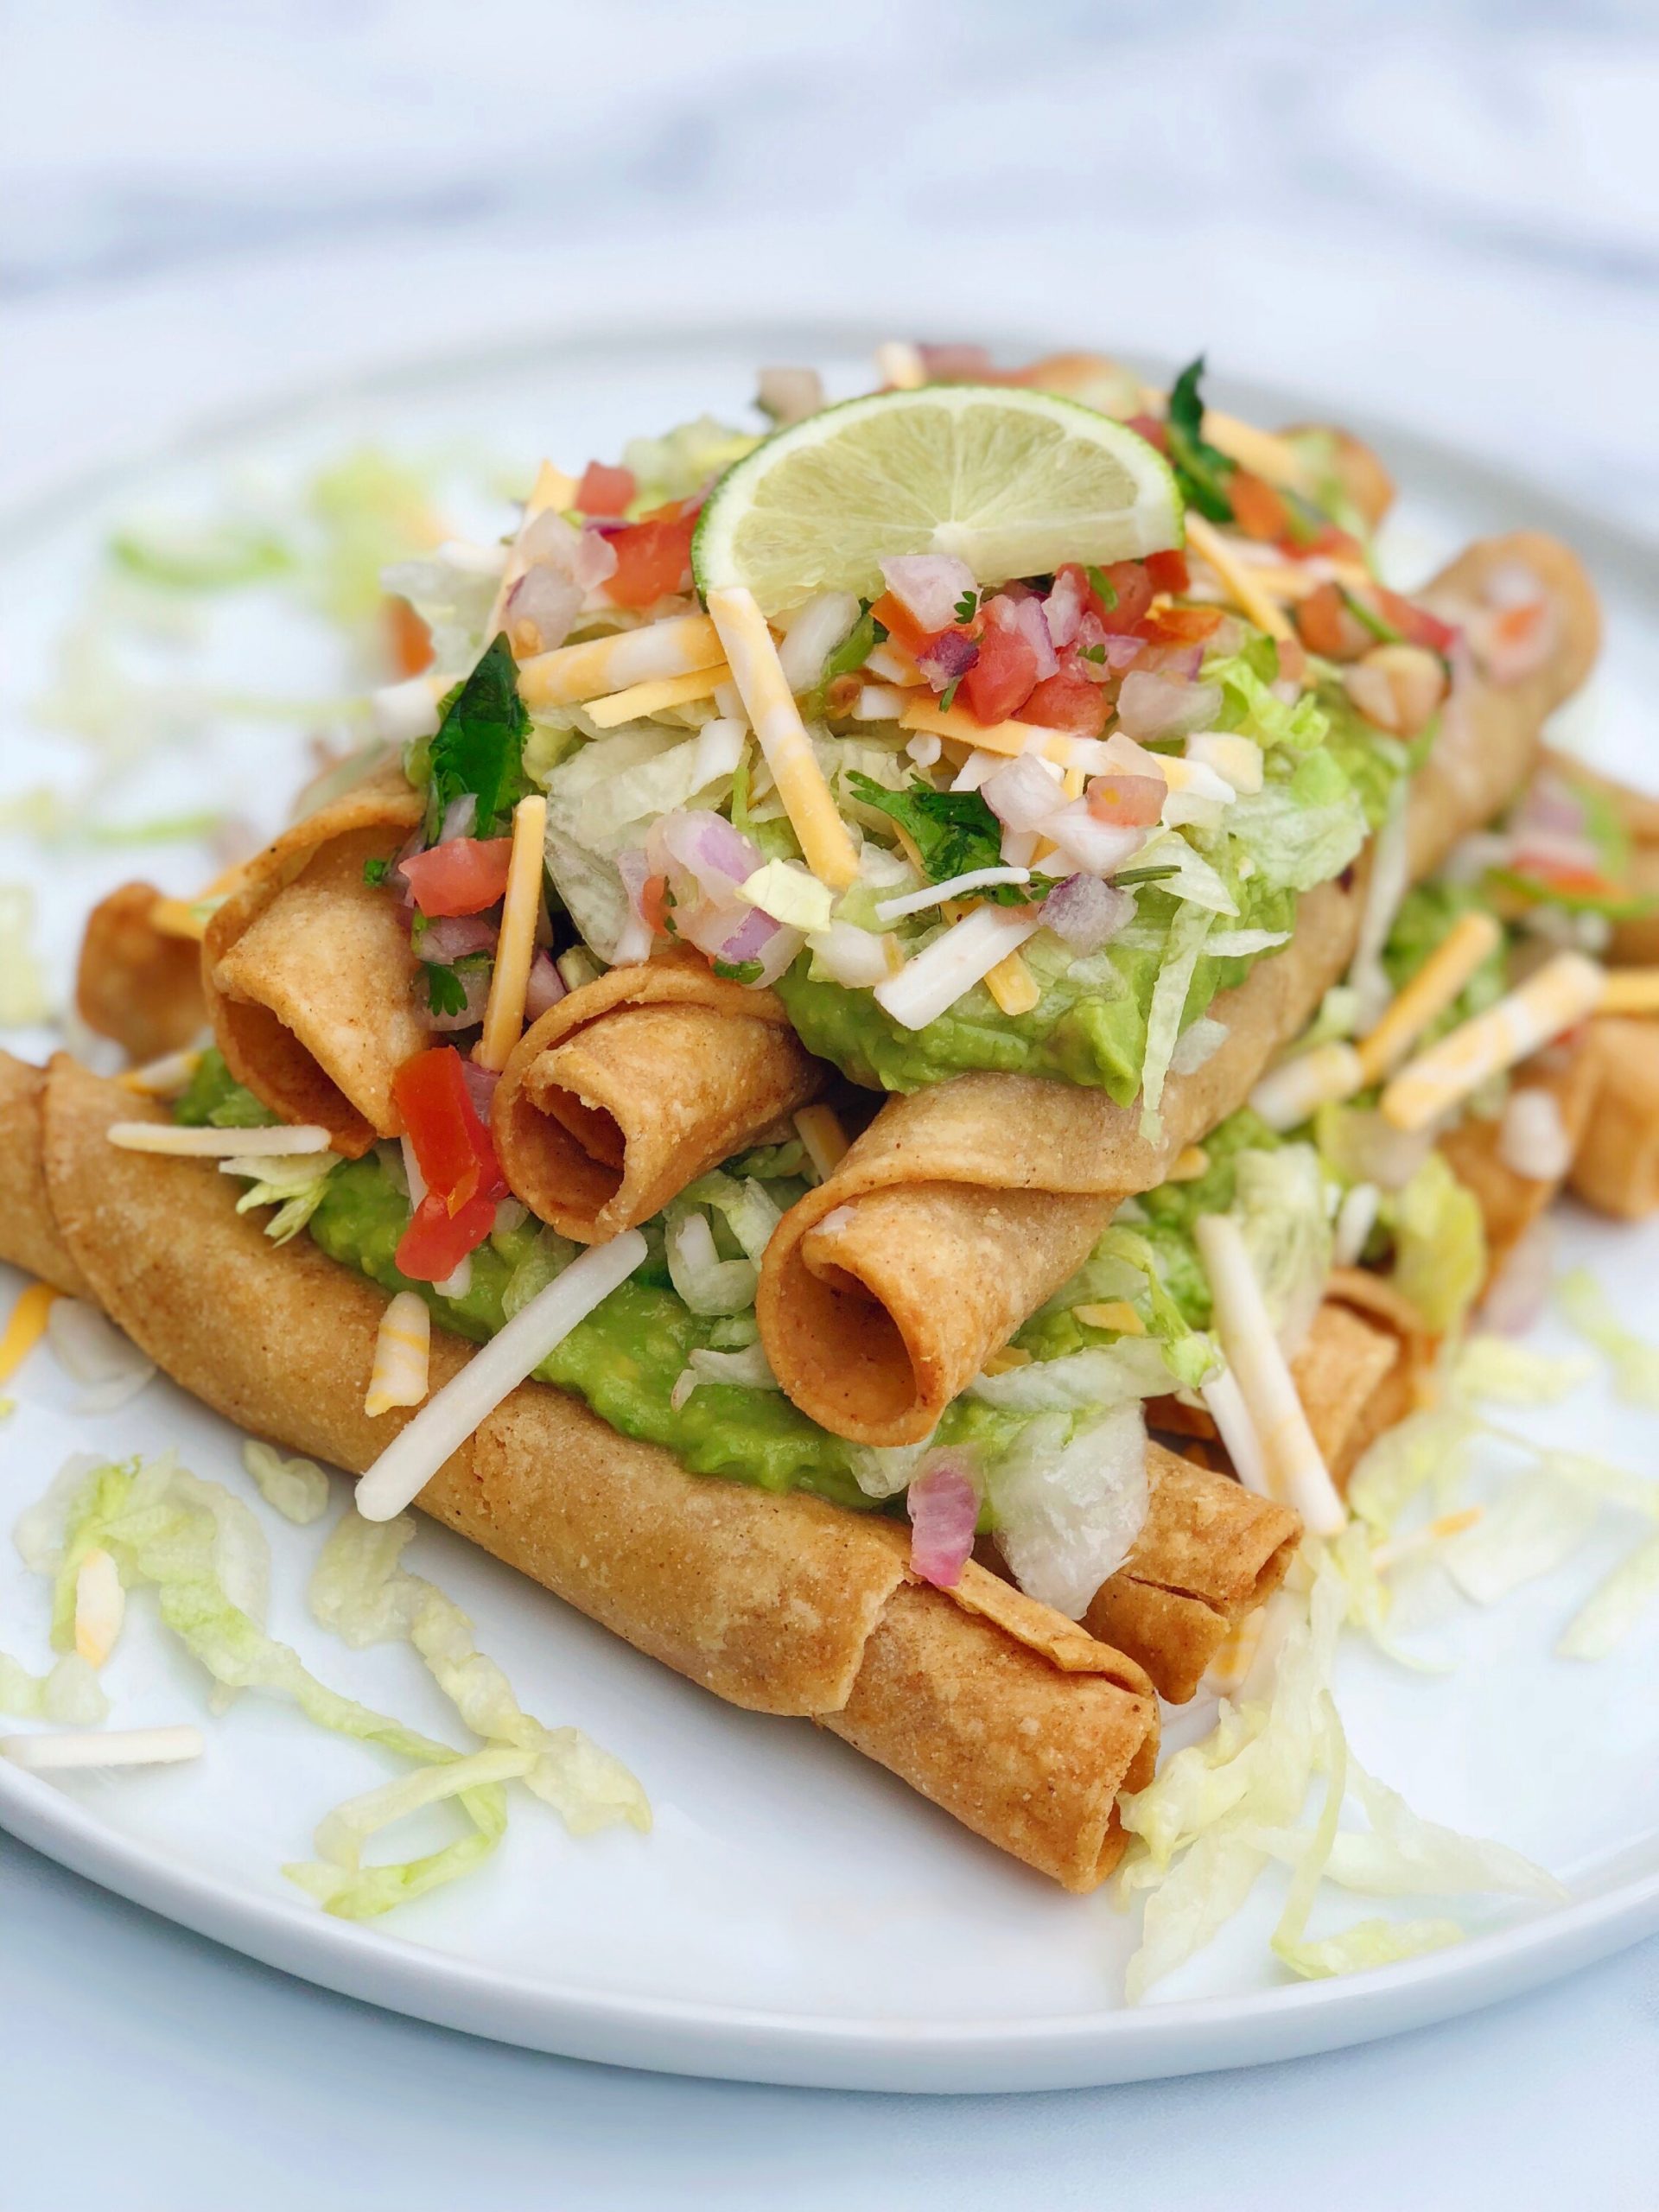 Dish of Vegan Rolled Tacos